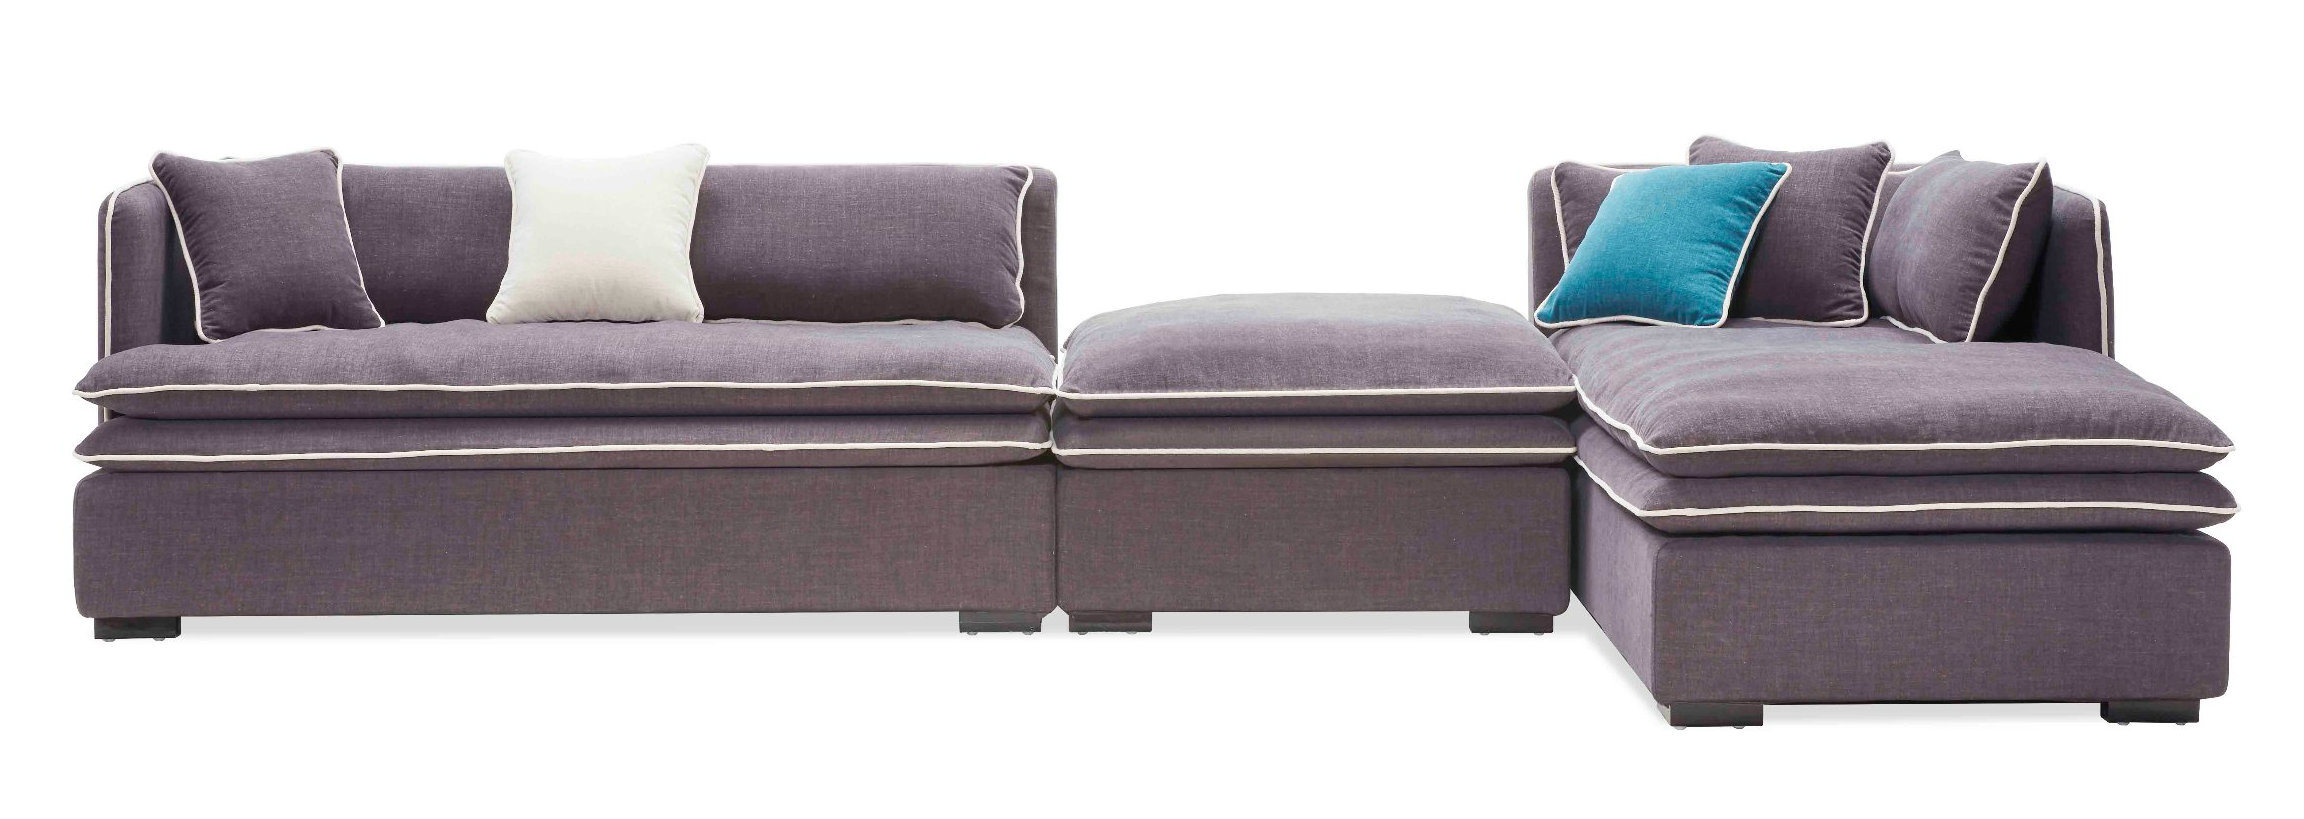 Fabric Modern Leisure Corner Sofa